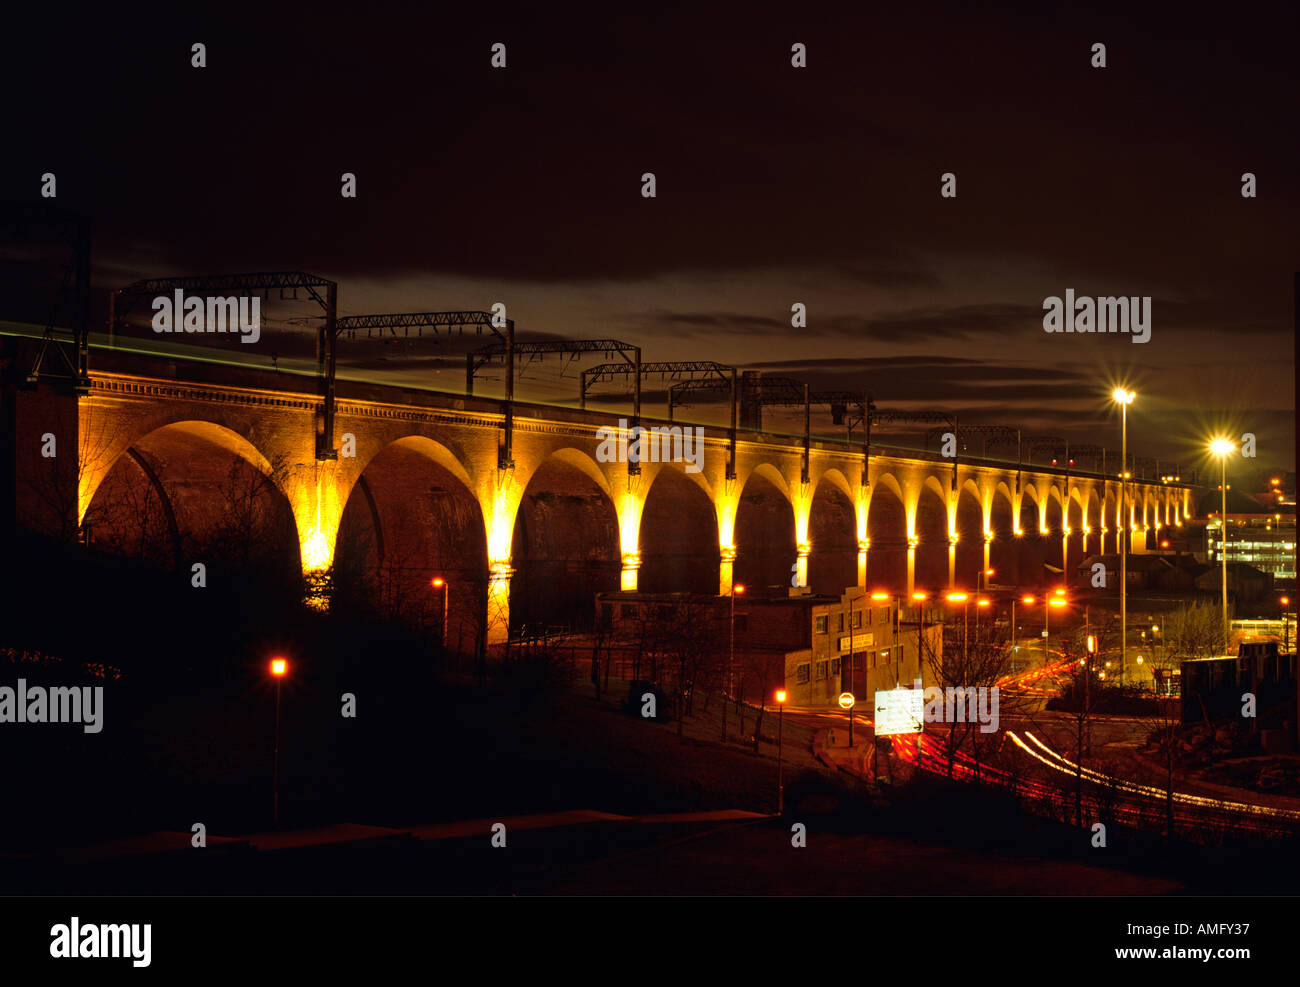 Cheshire Stockport Railway Viaduct at night Stock Photo